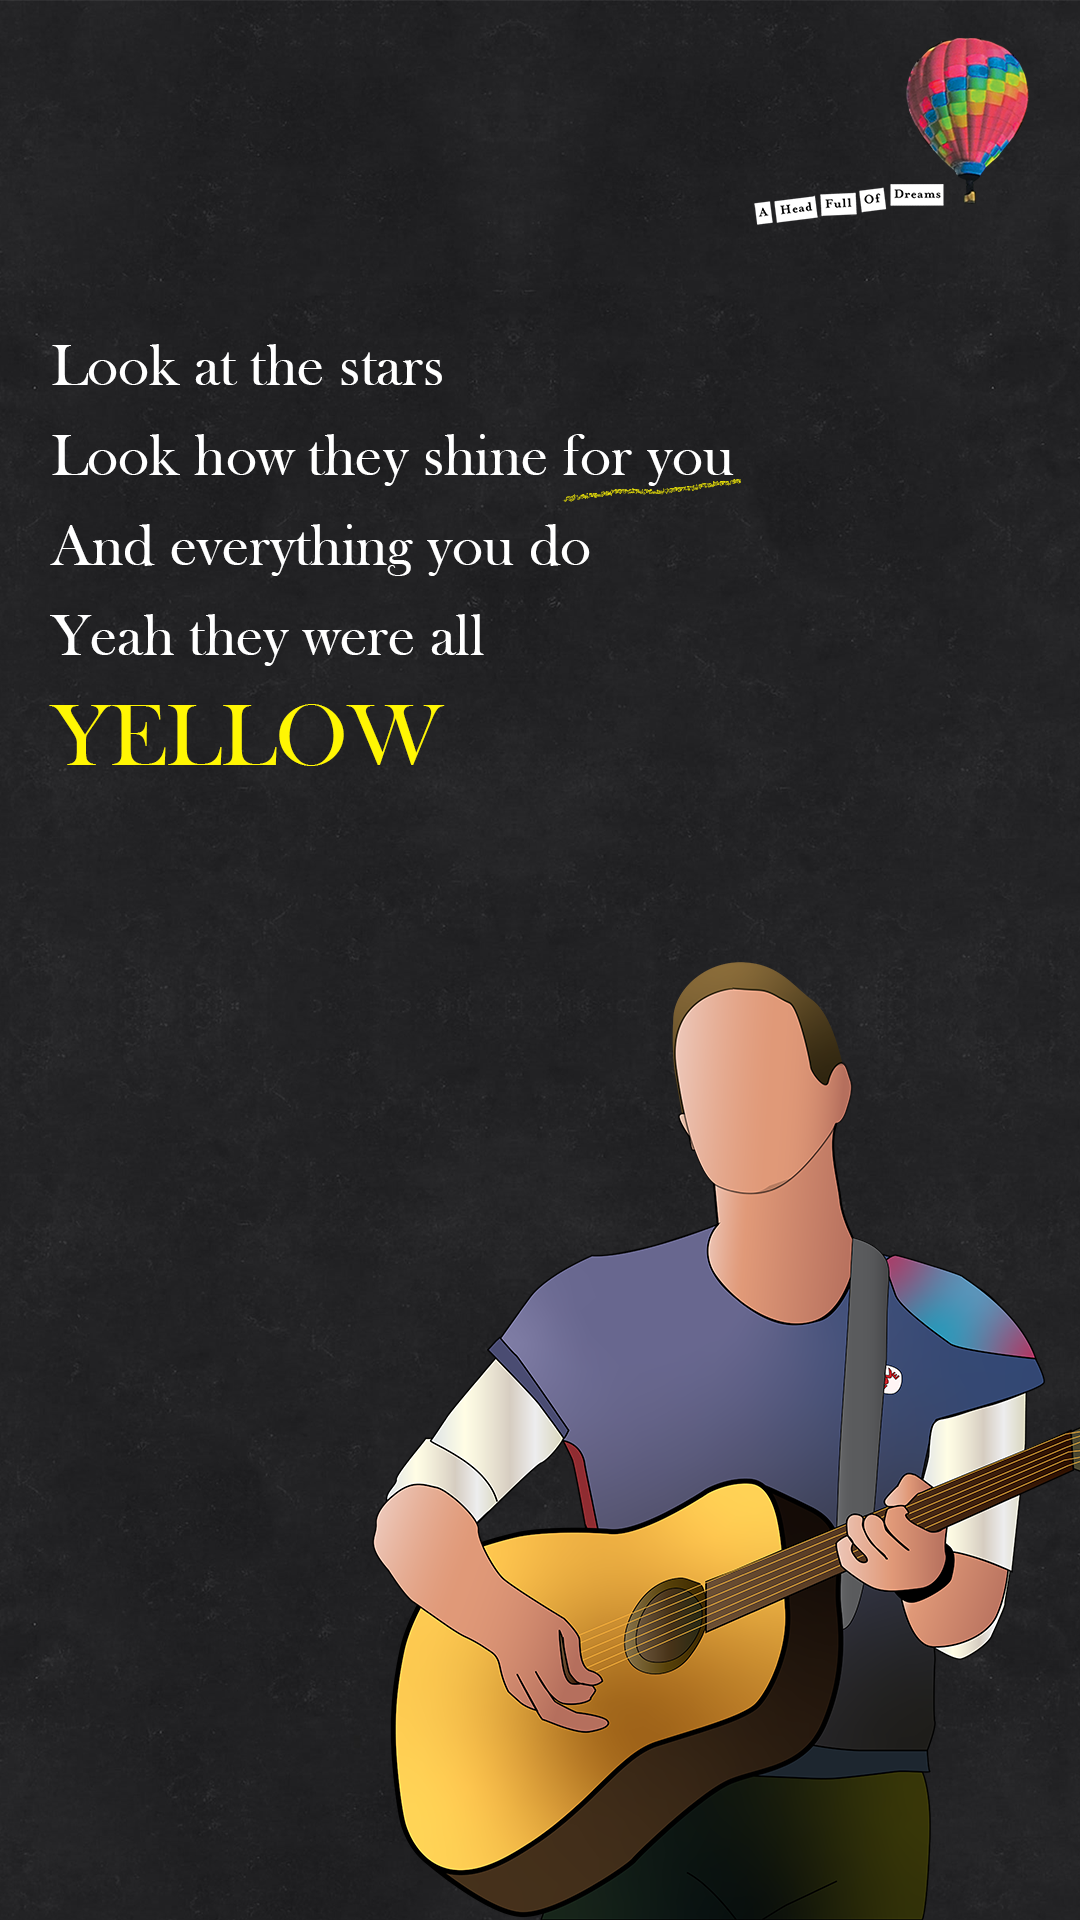 Coldplay Lyrics Wallpapers